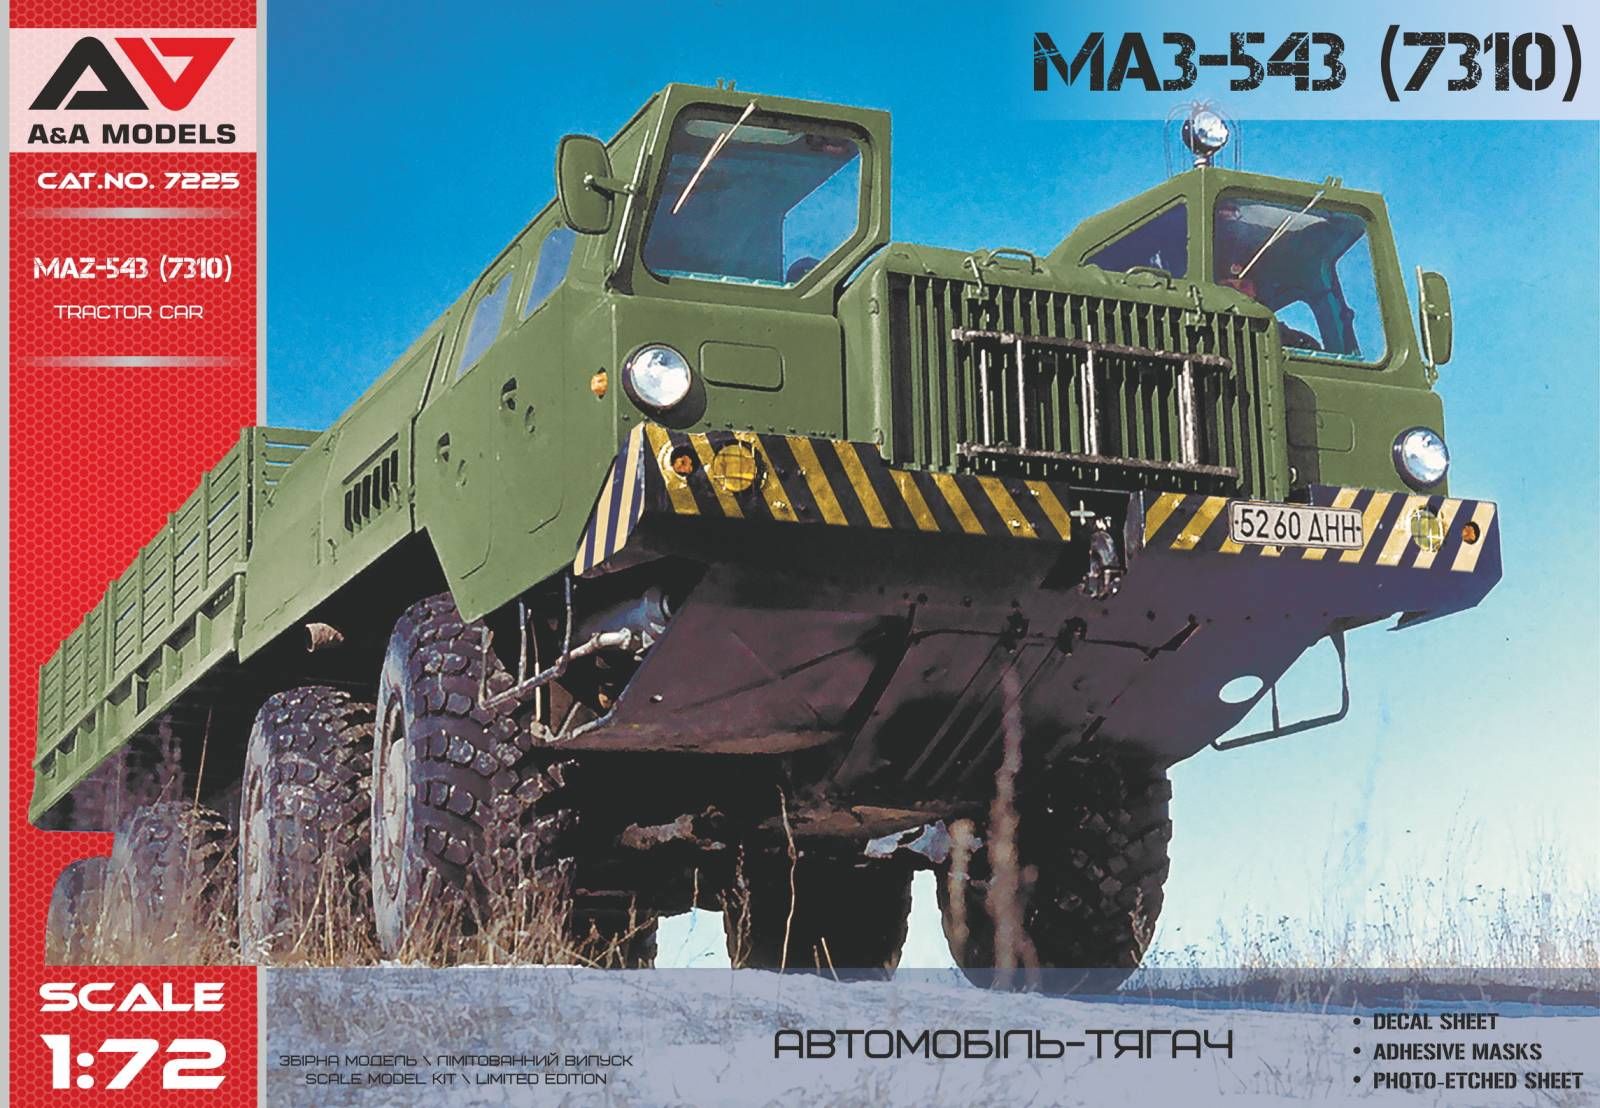 A&A Models 1/72 MAZ-543 Heavy artillery truck